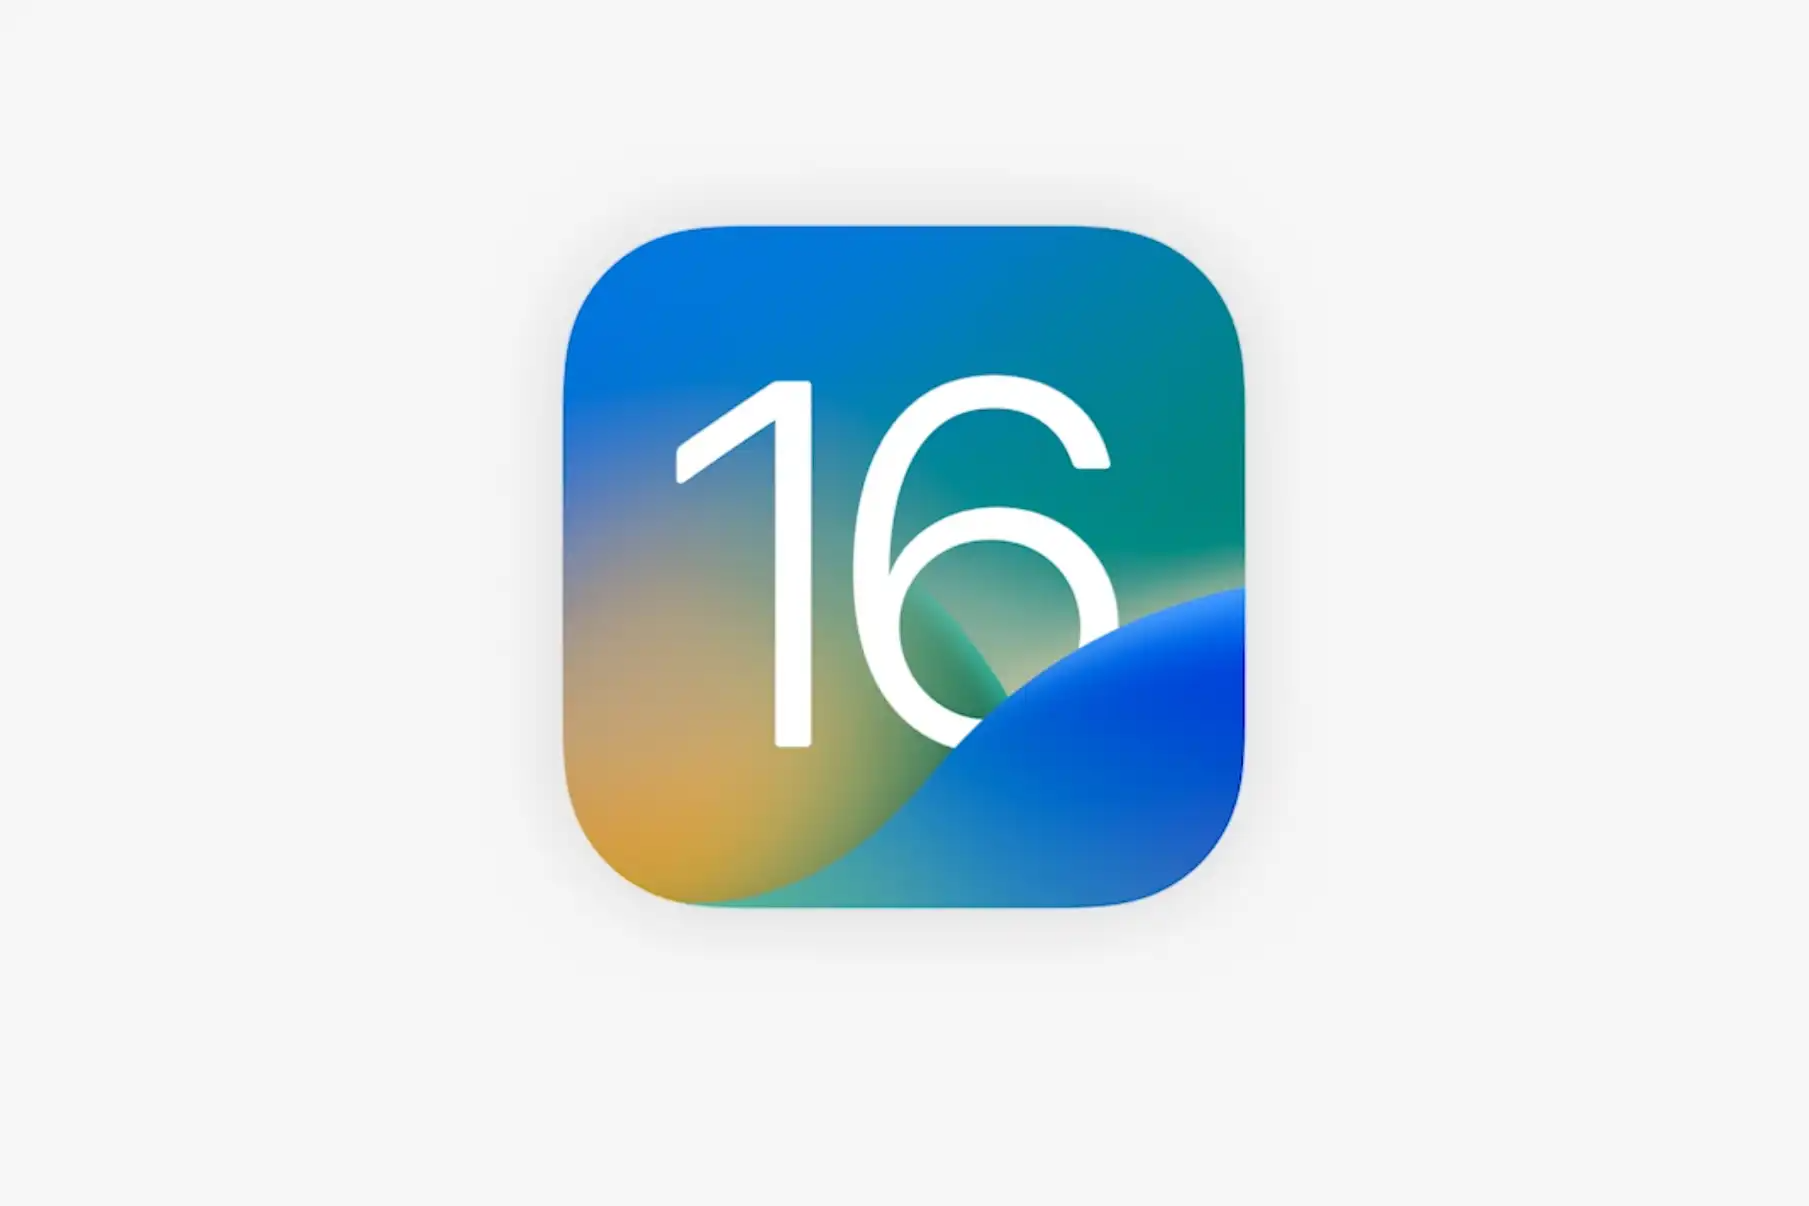 iOS/iPadOS 16